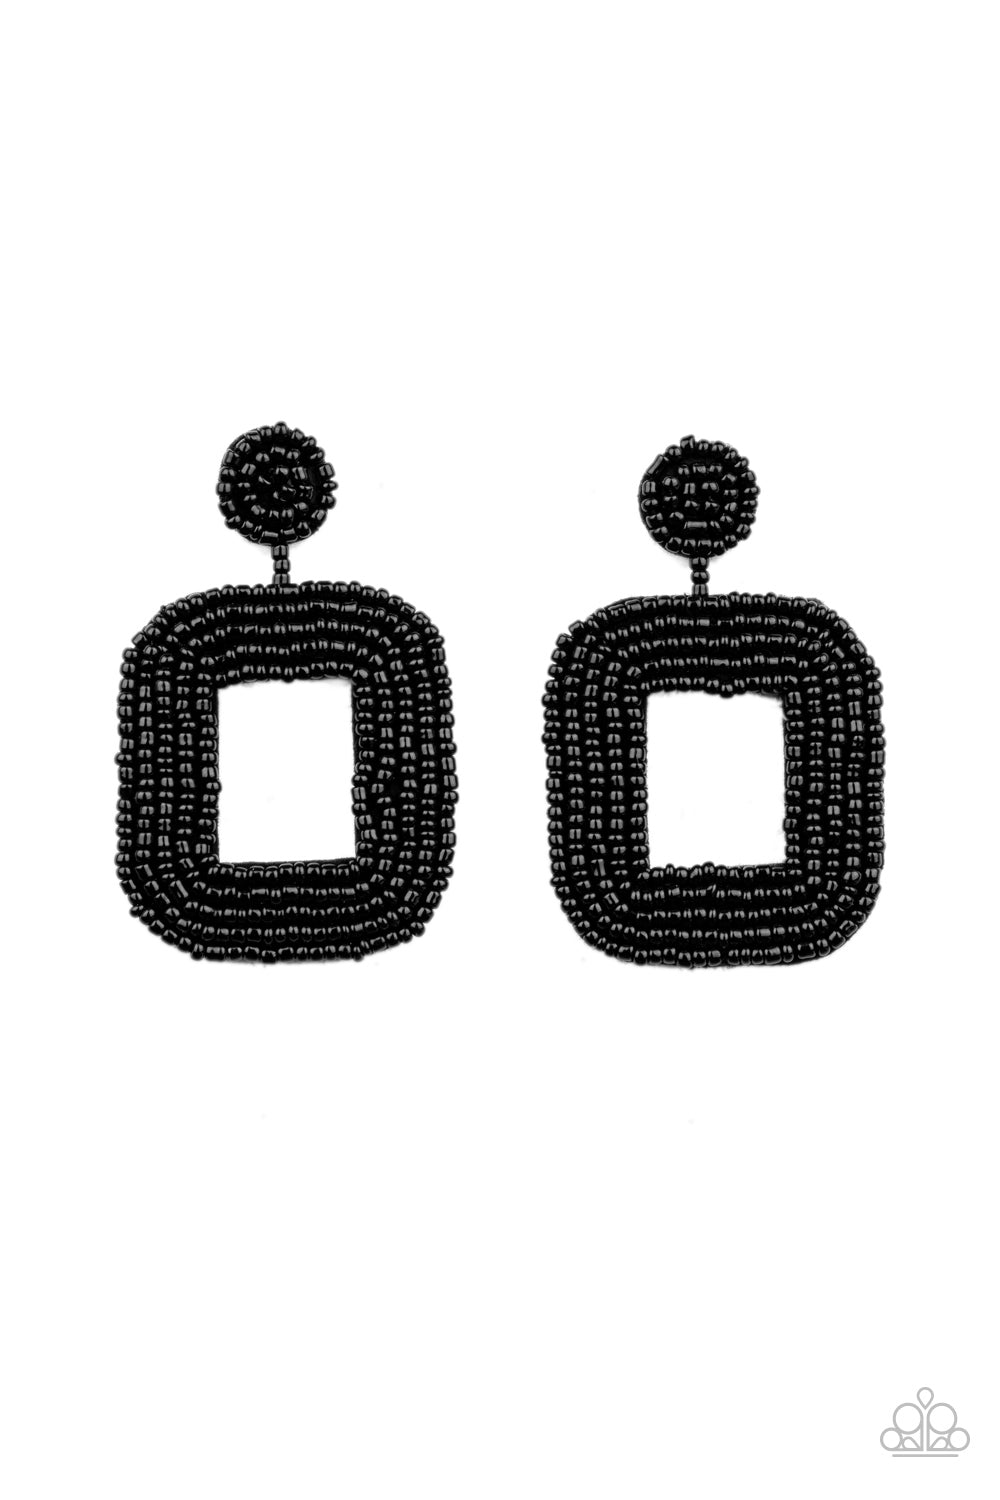 Paparazzi Accessories - Beaded Bella #E246- Black Earrings